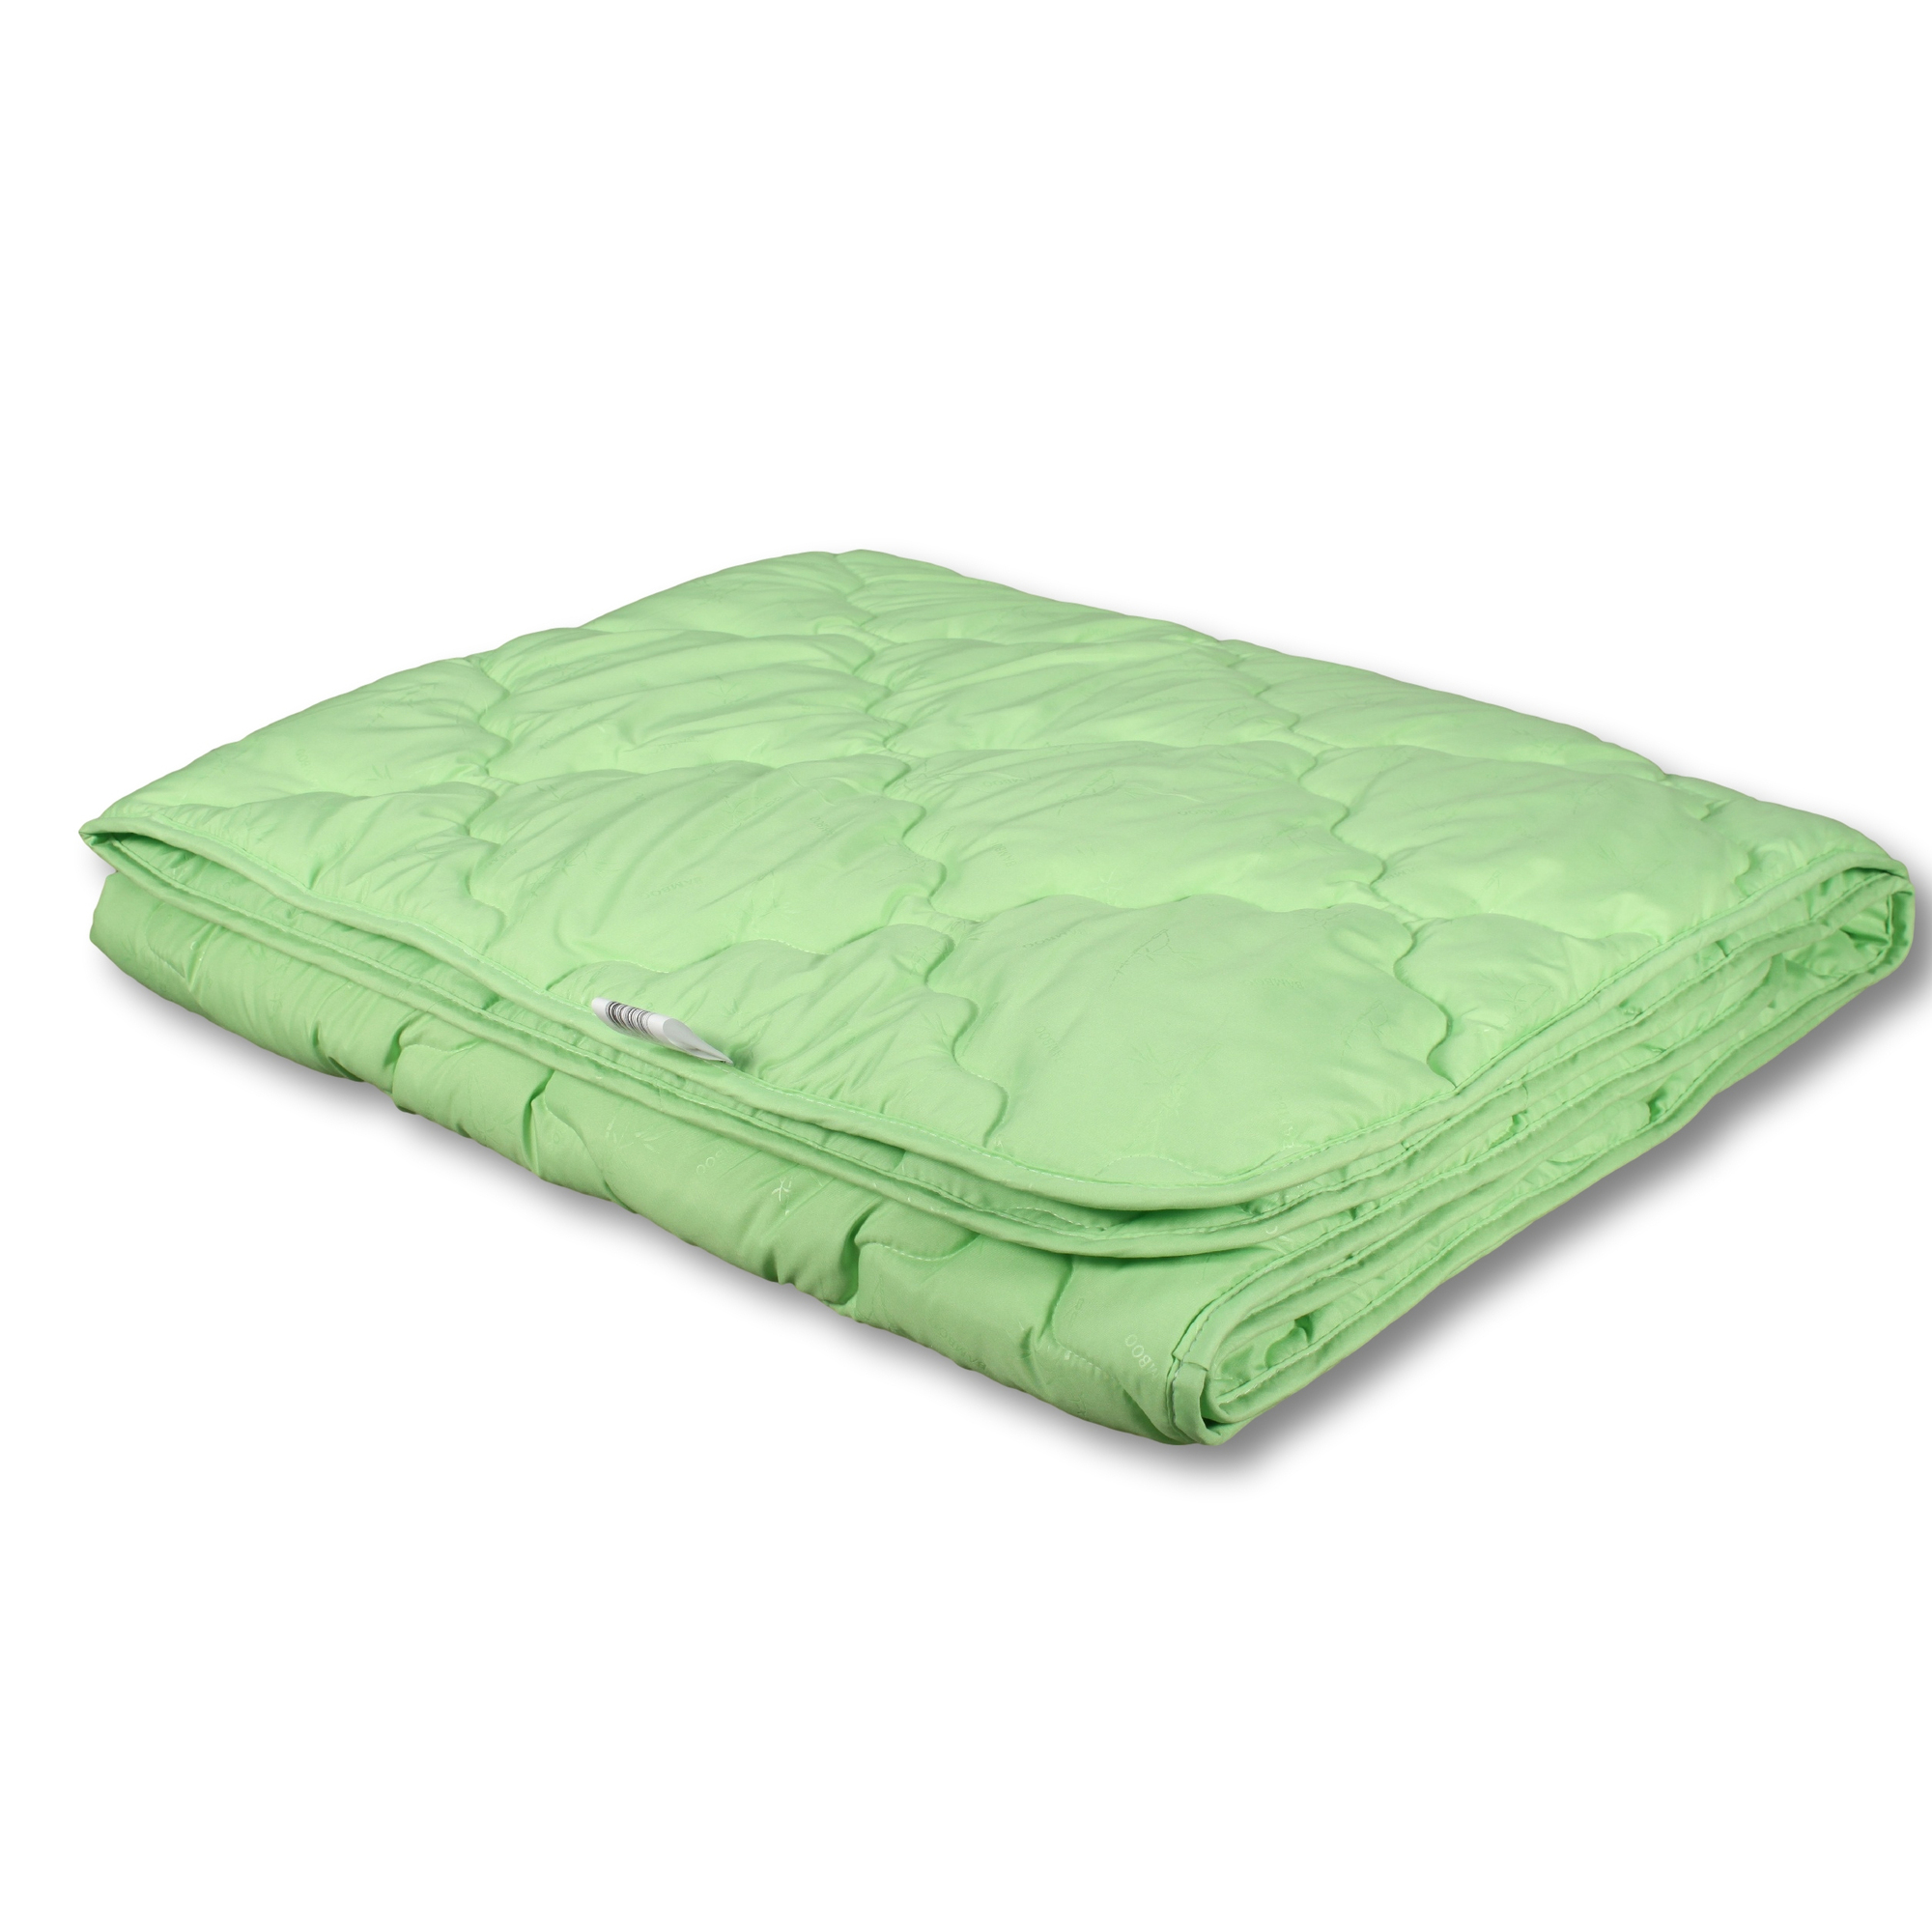 Одеяло Madrisa Легкое (200х220 см), размер 200х220 см, цвет зеленый snt43194 Одеяло Madrisa Легкое (200х220 см) - фото 1